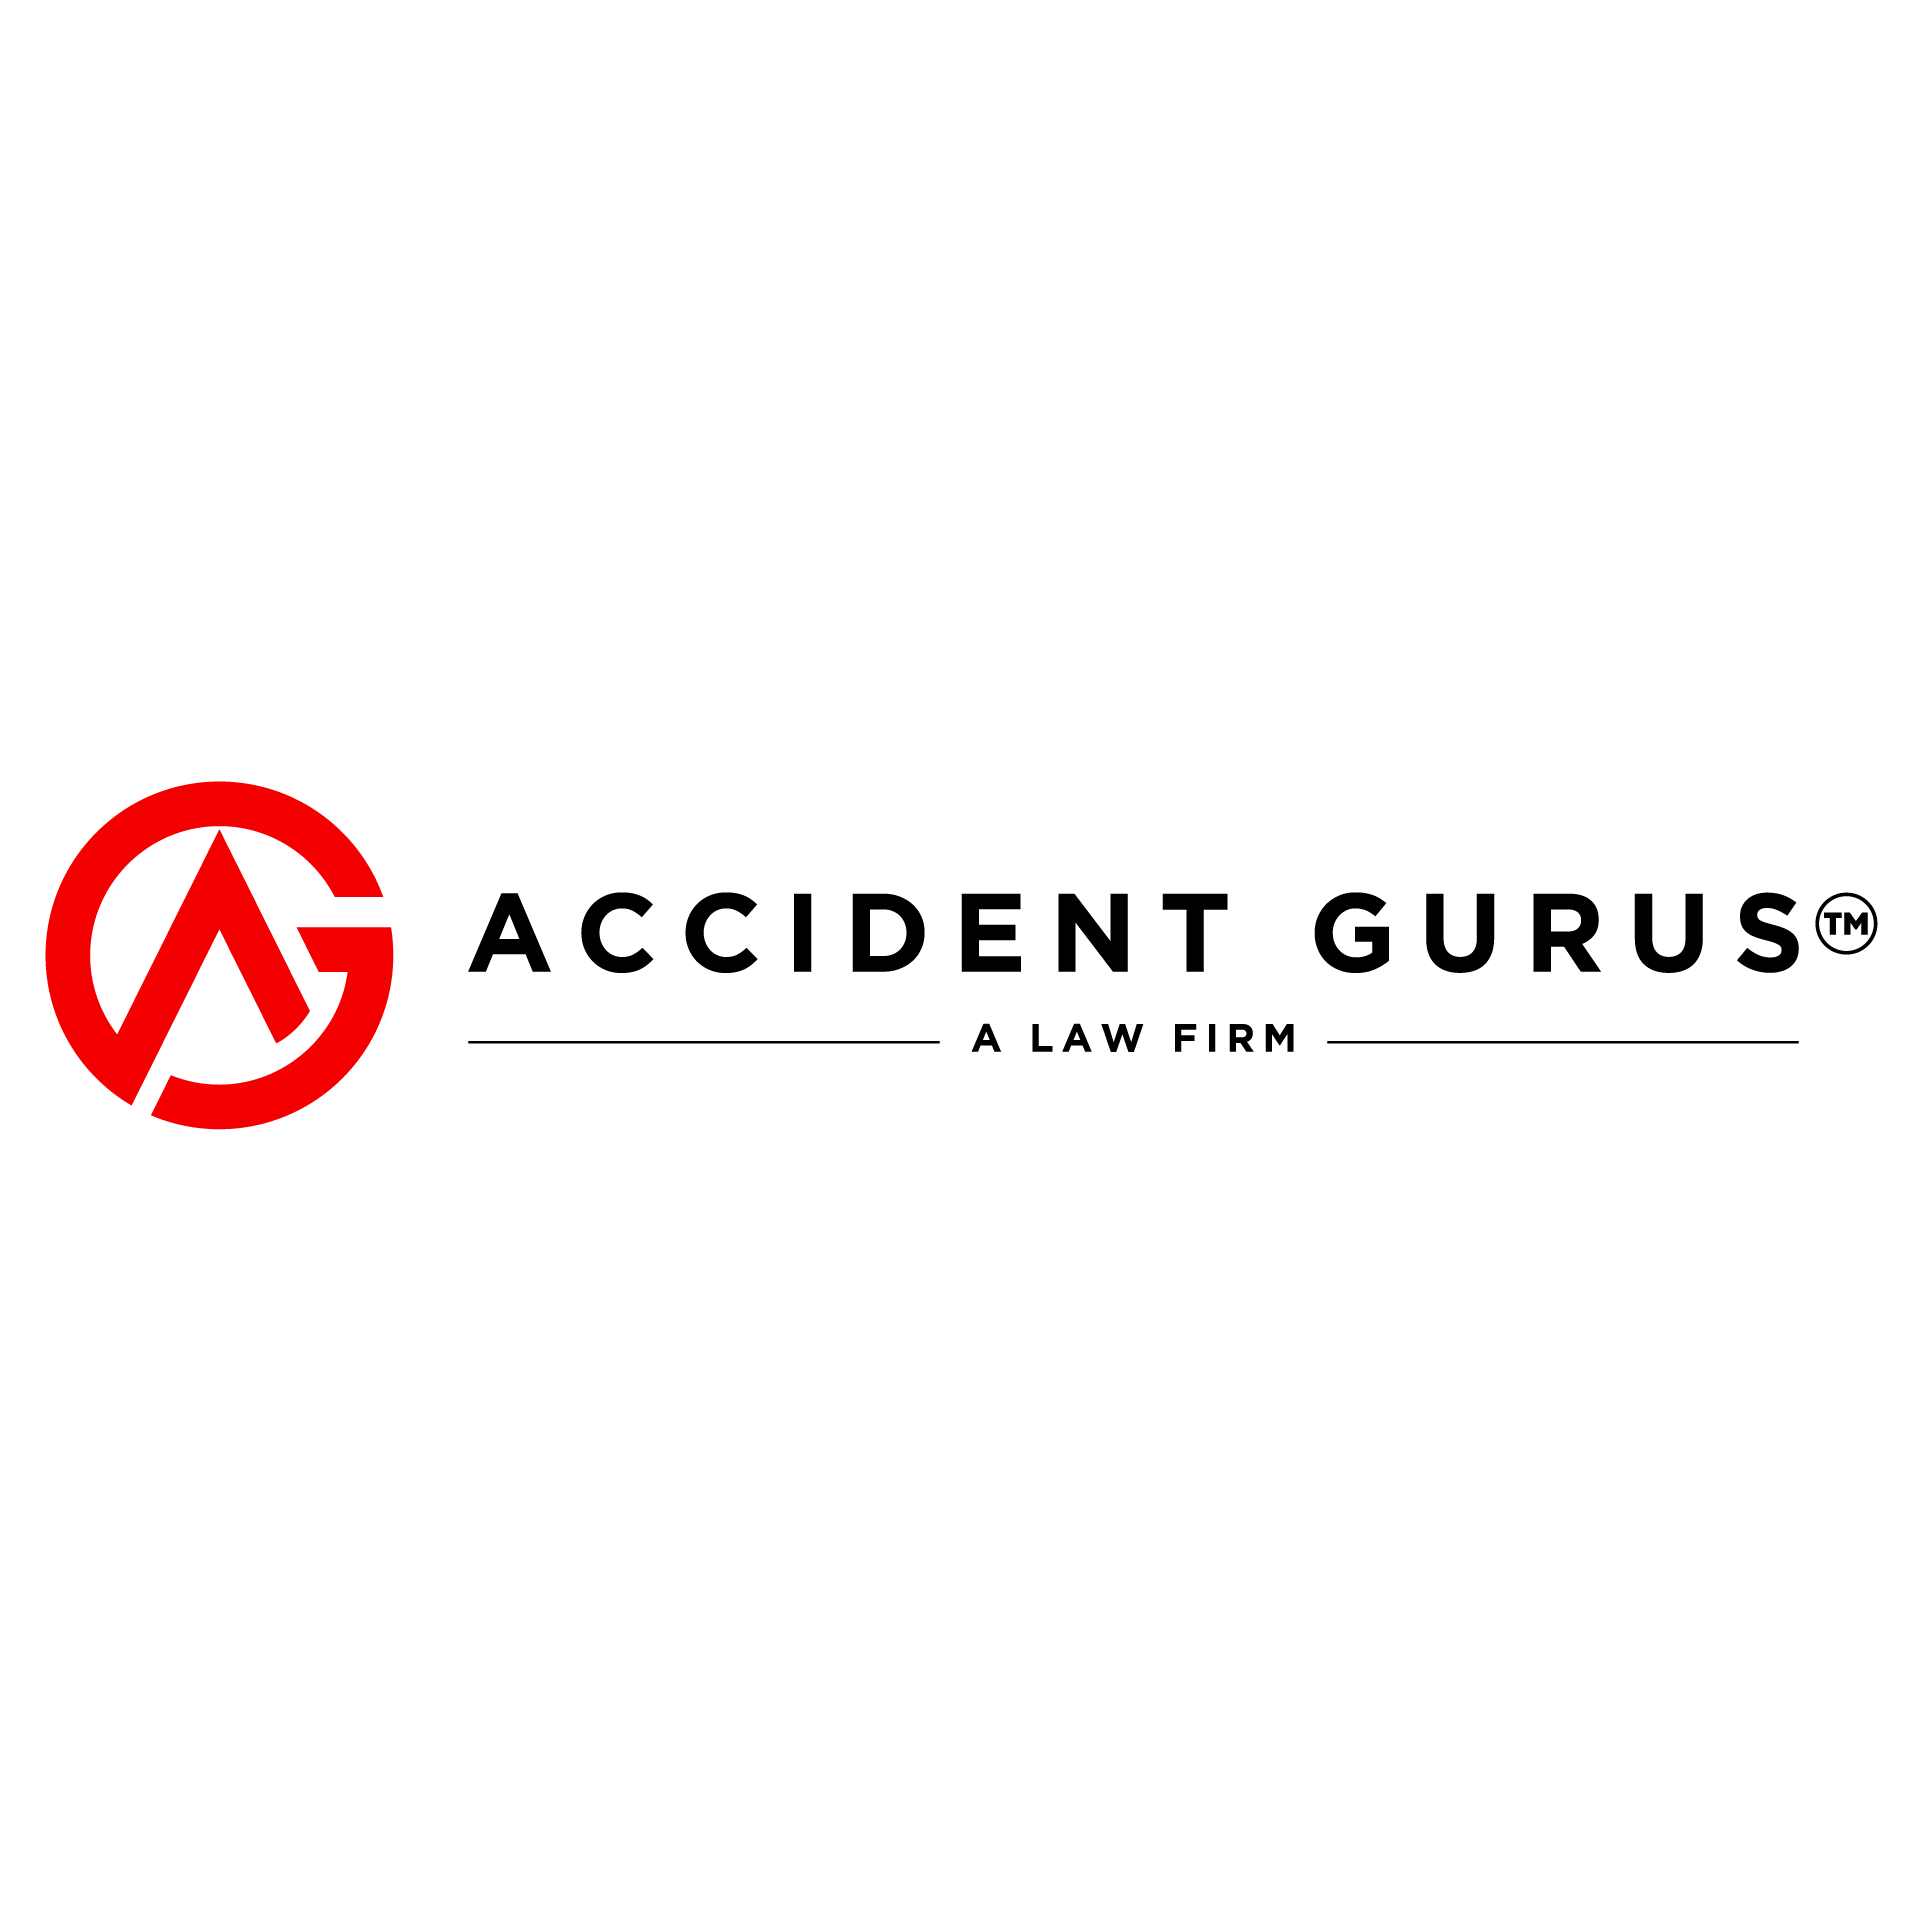 Accident Gurus - Hollywood, FL 33020 - (305)690-7776 | ShowMeLocal.com